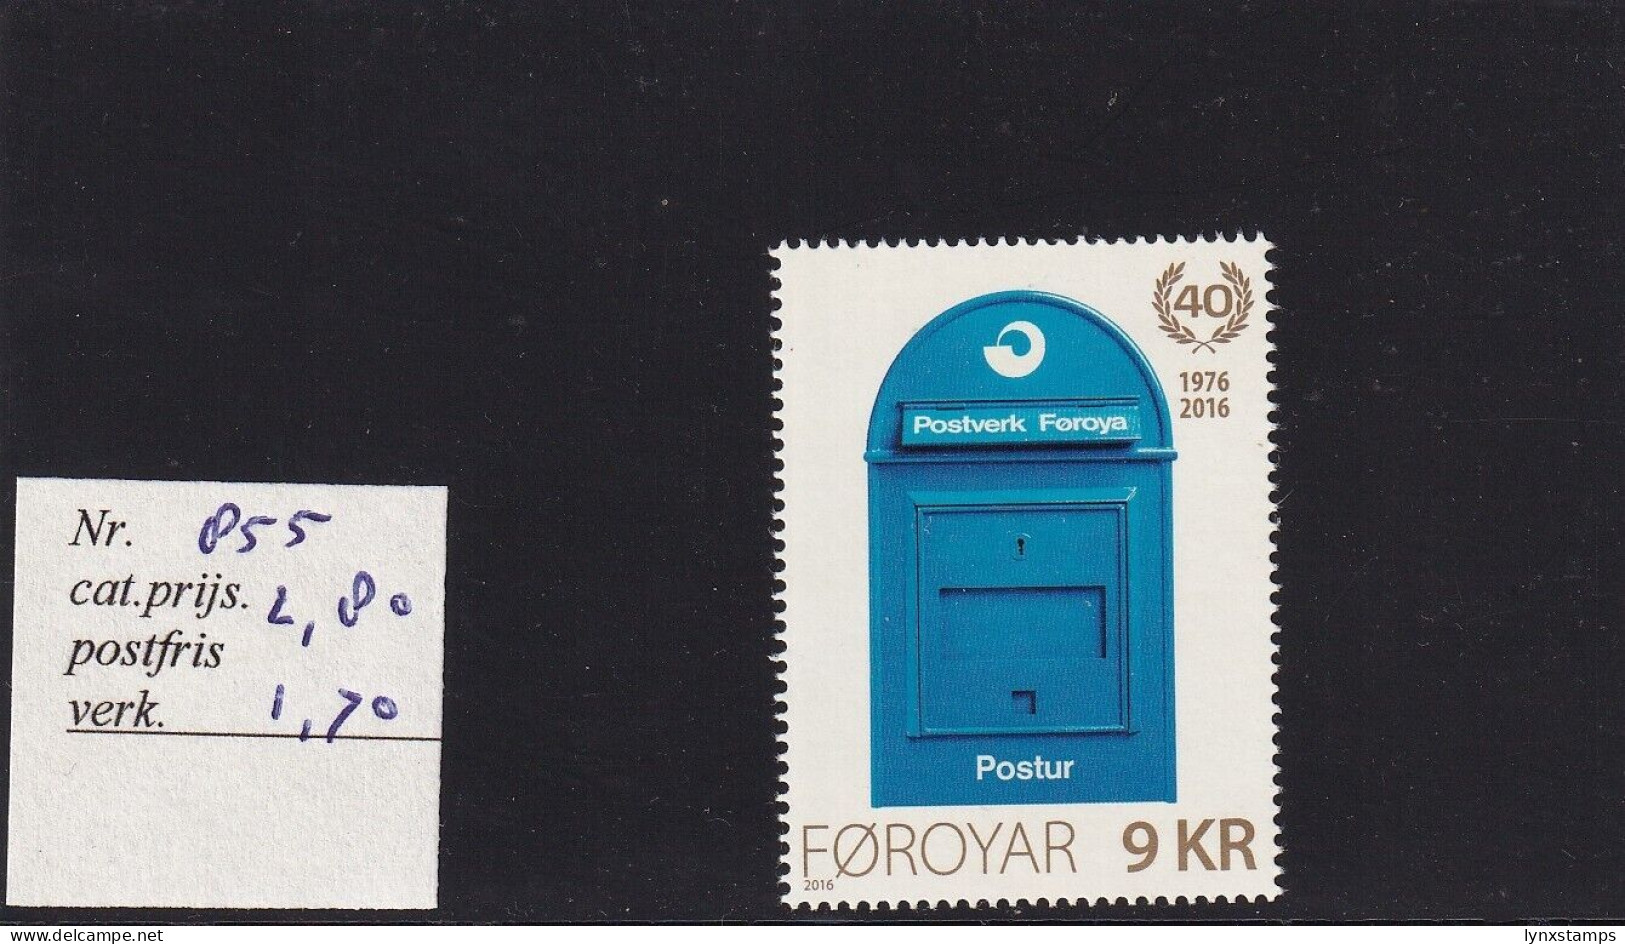 SA03 Faroe Islands 2016 The 40th Anniversary Of Postverk Føroya Mint Stamp - Faroe Islands